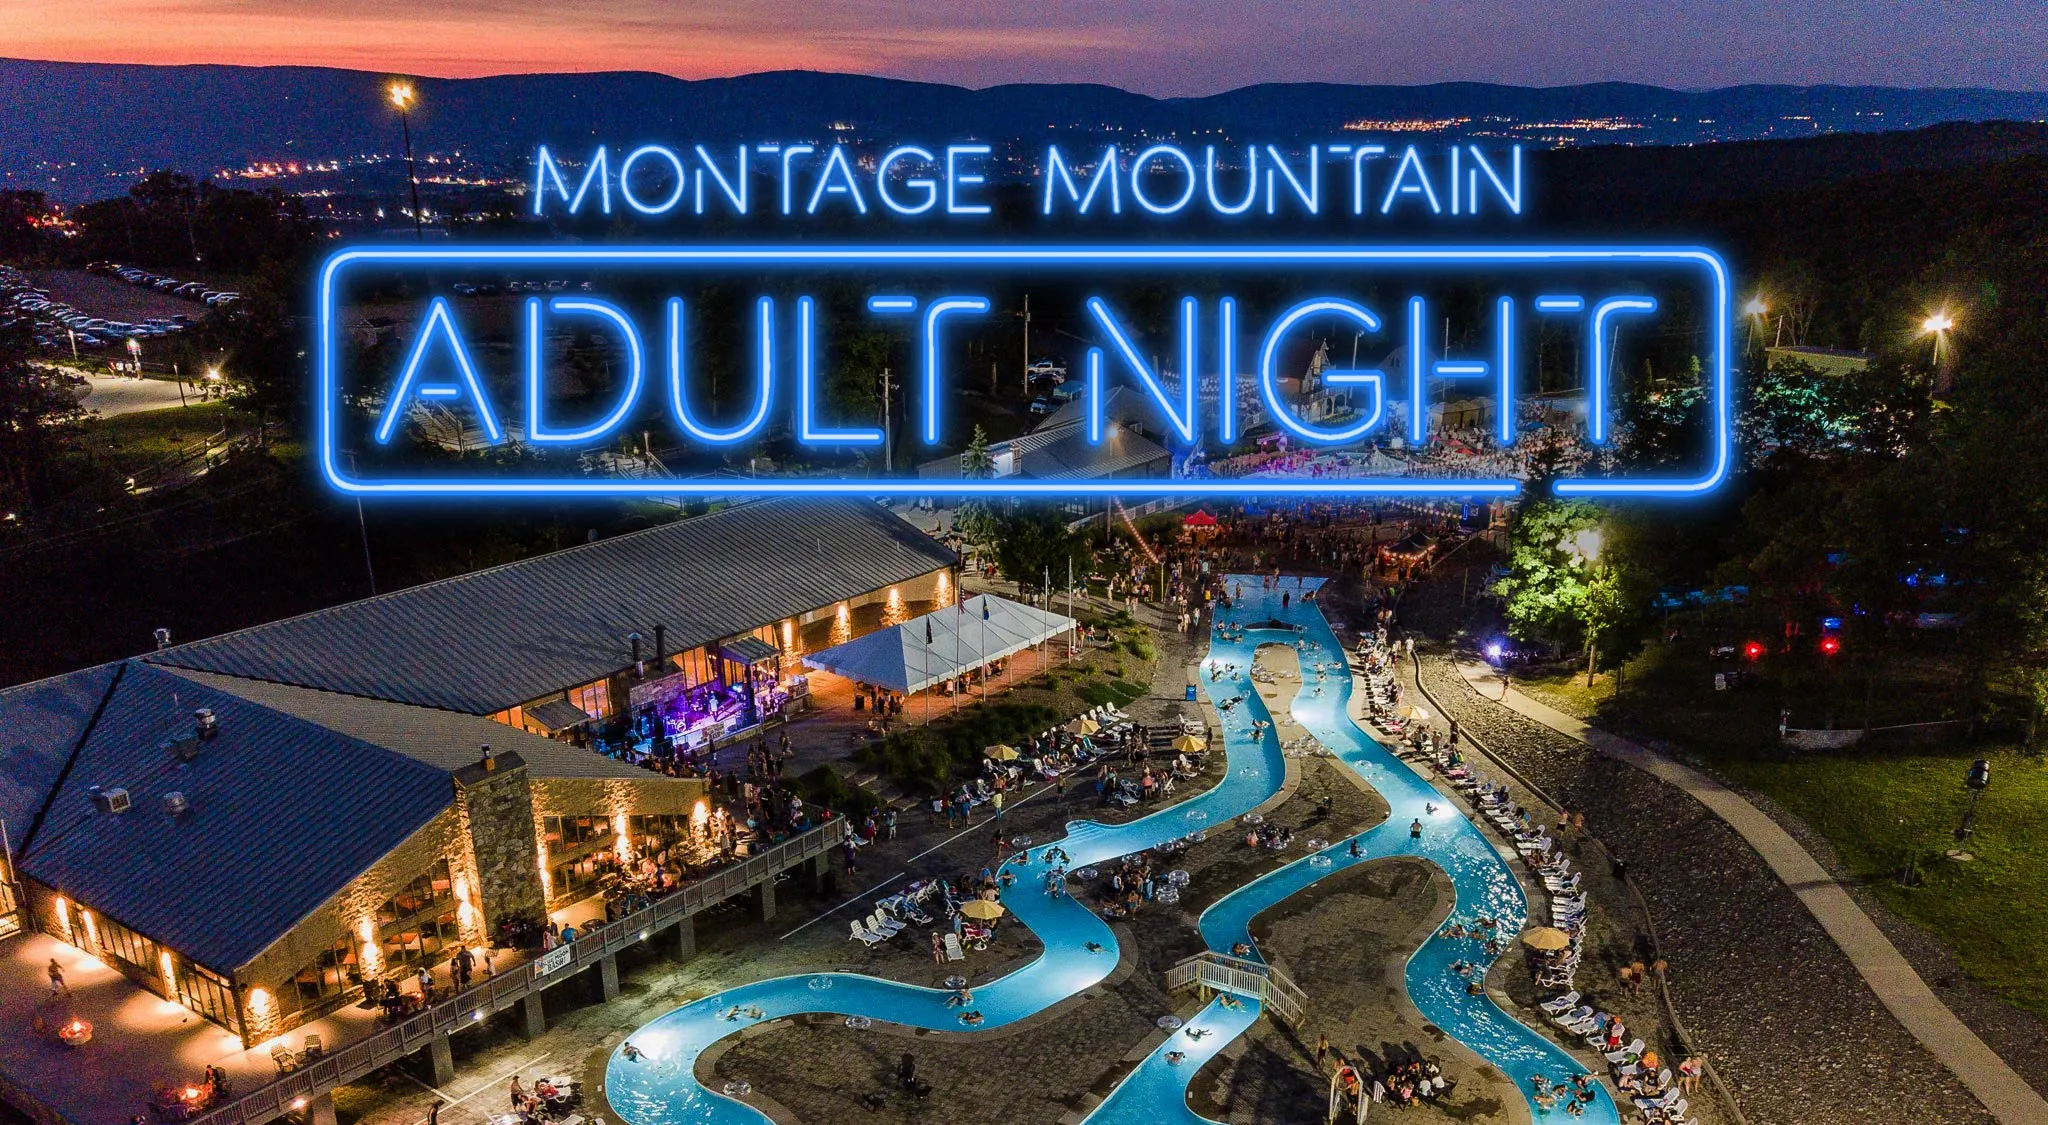 Montage Mountain Water Park Last Adult Night of the season!